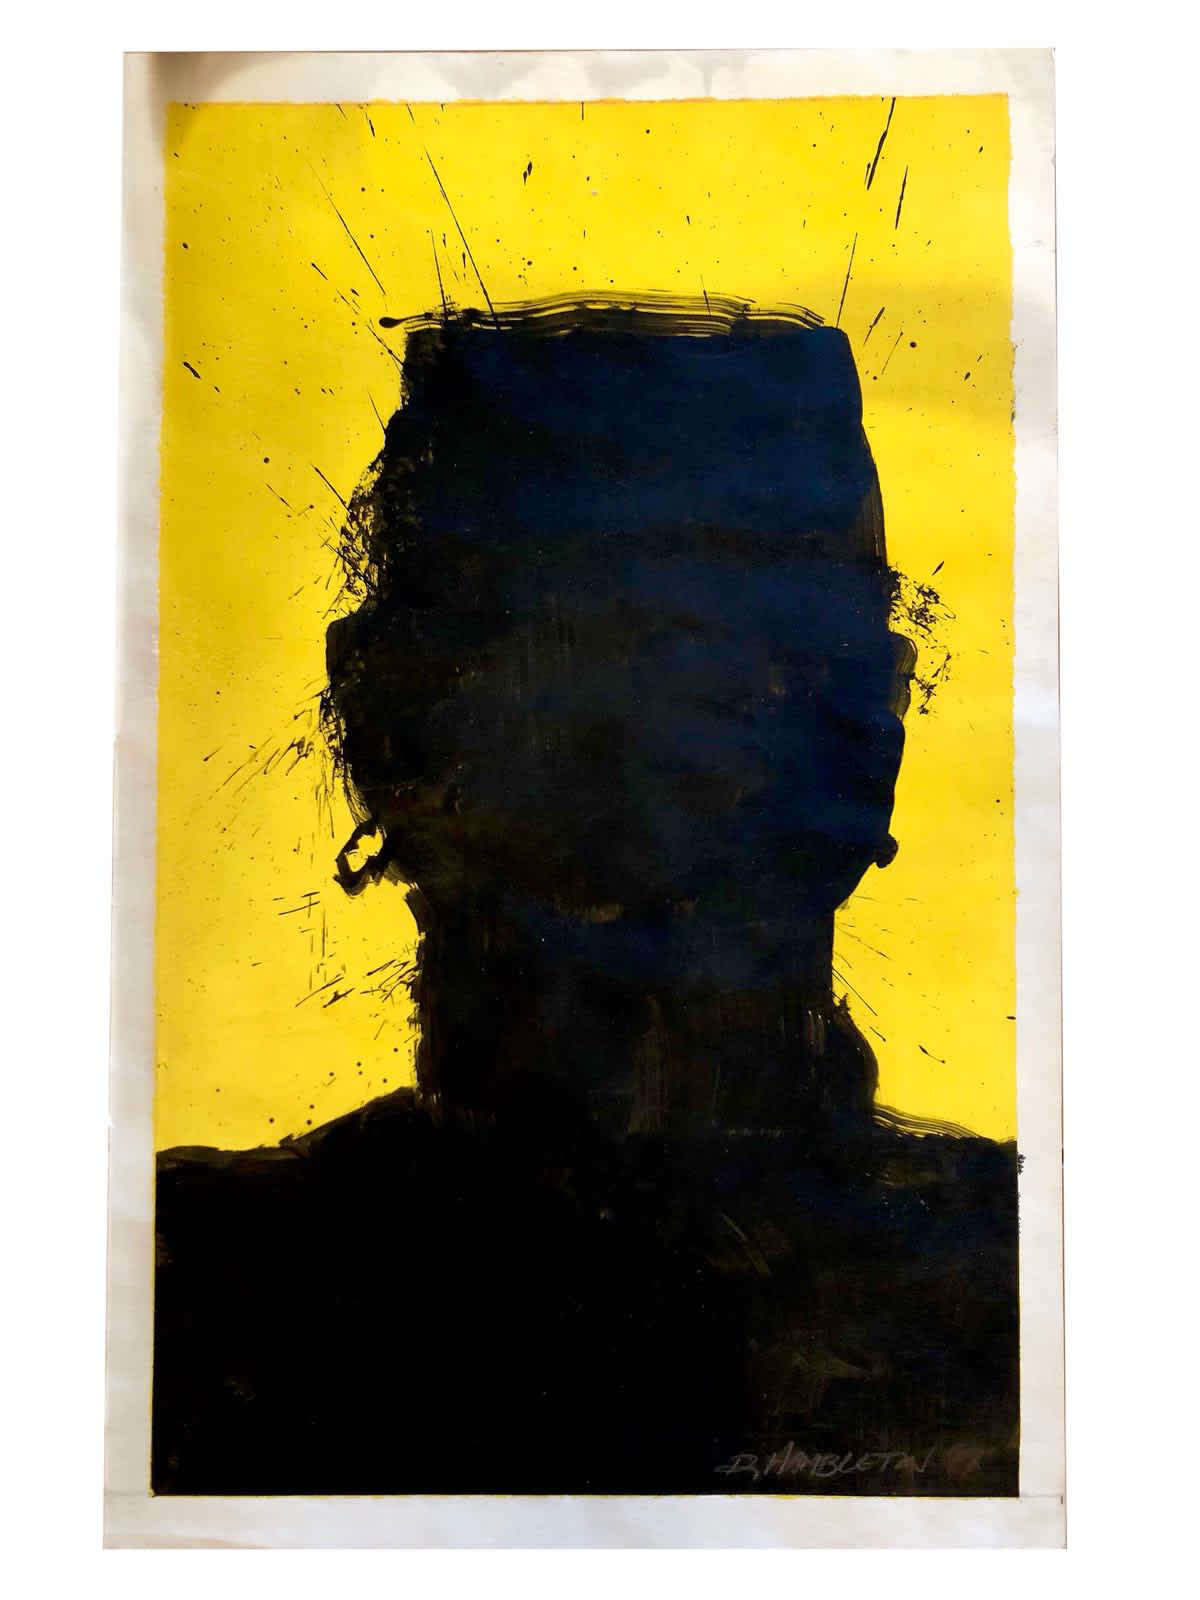 Richard Hambleton, Shadow Portrait, 1999